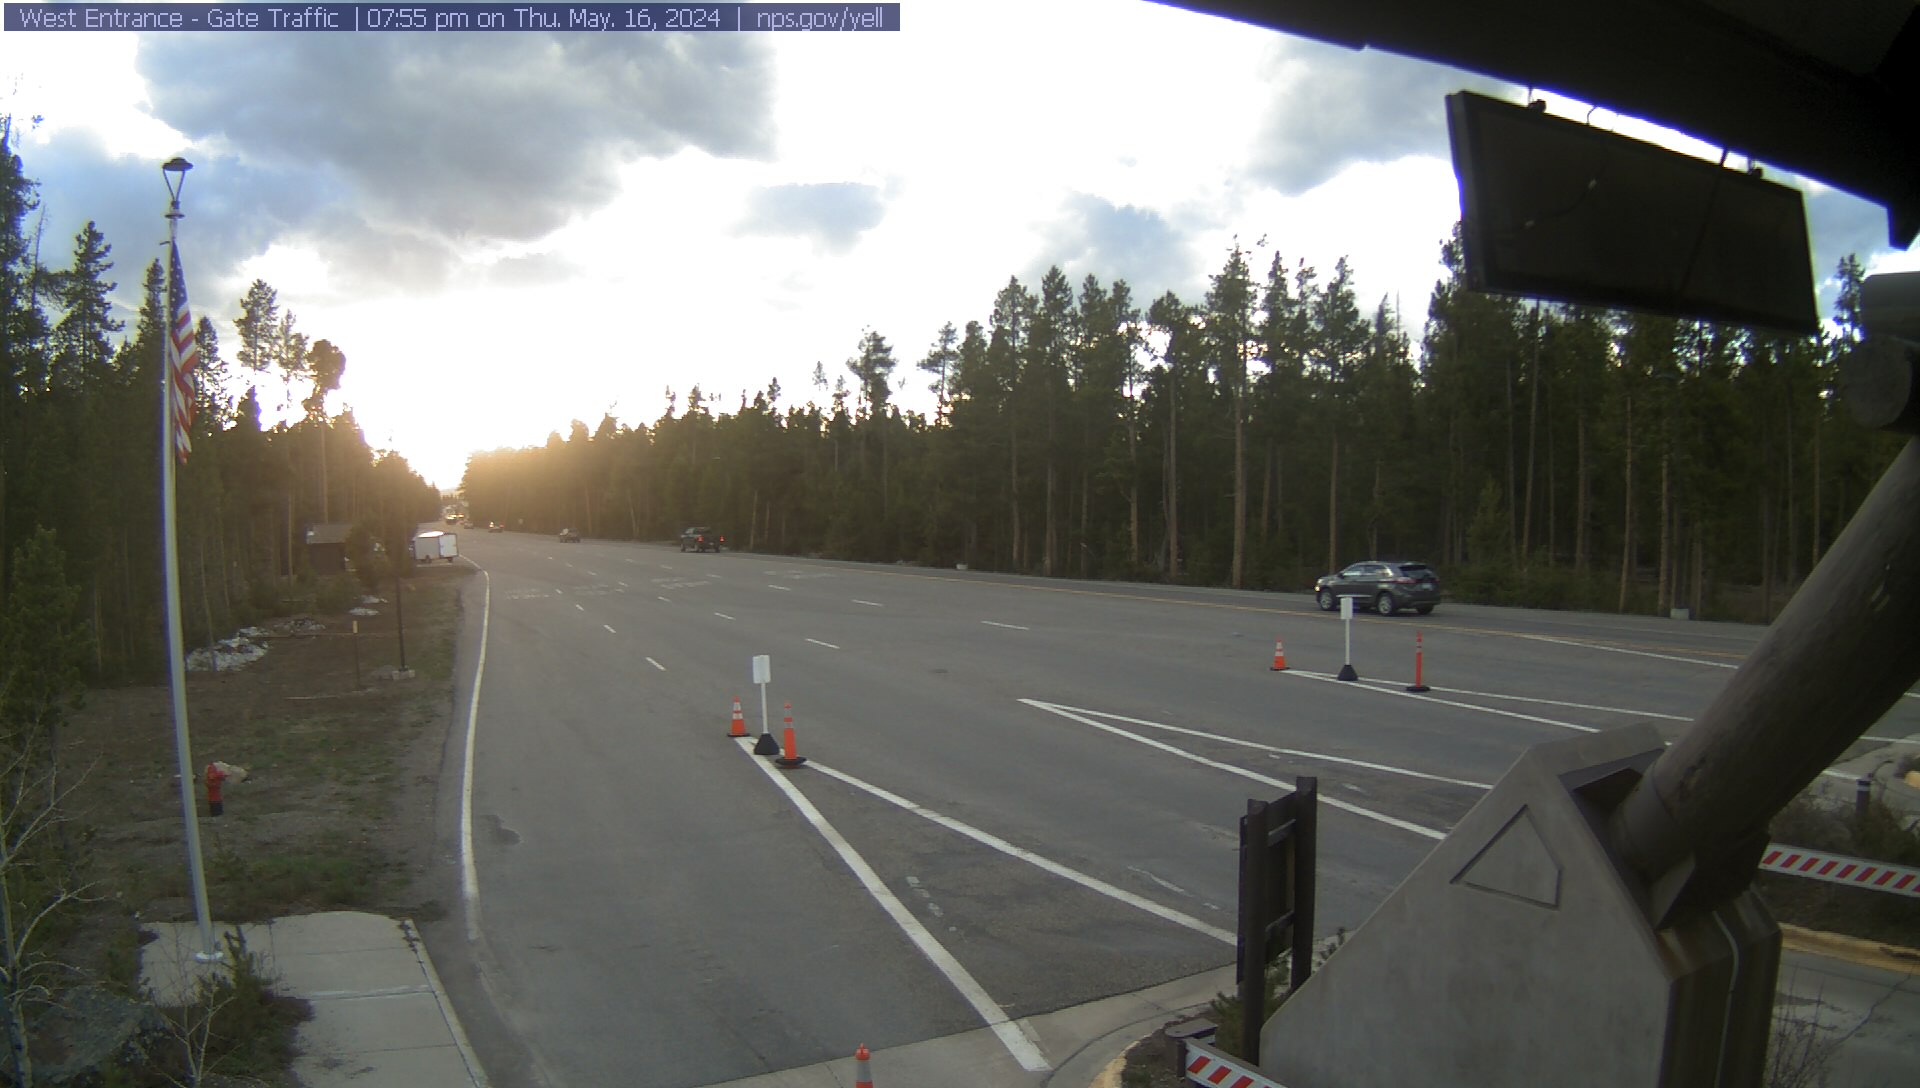 Yellowstone Entrance - Web Cam Down Temporarily